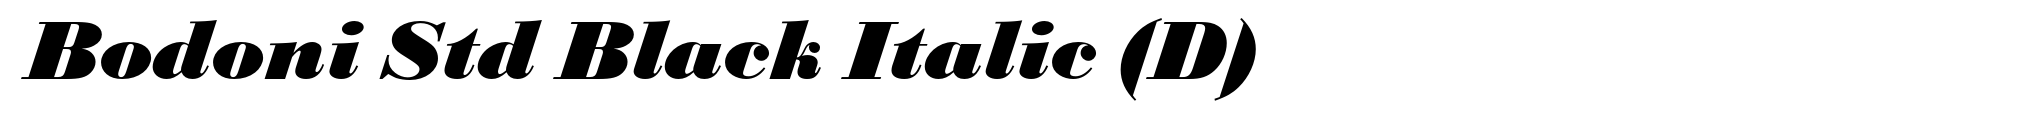 Bodoni Std Black Italic (D) image